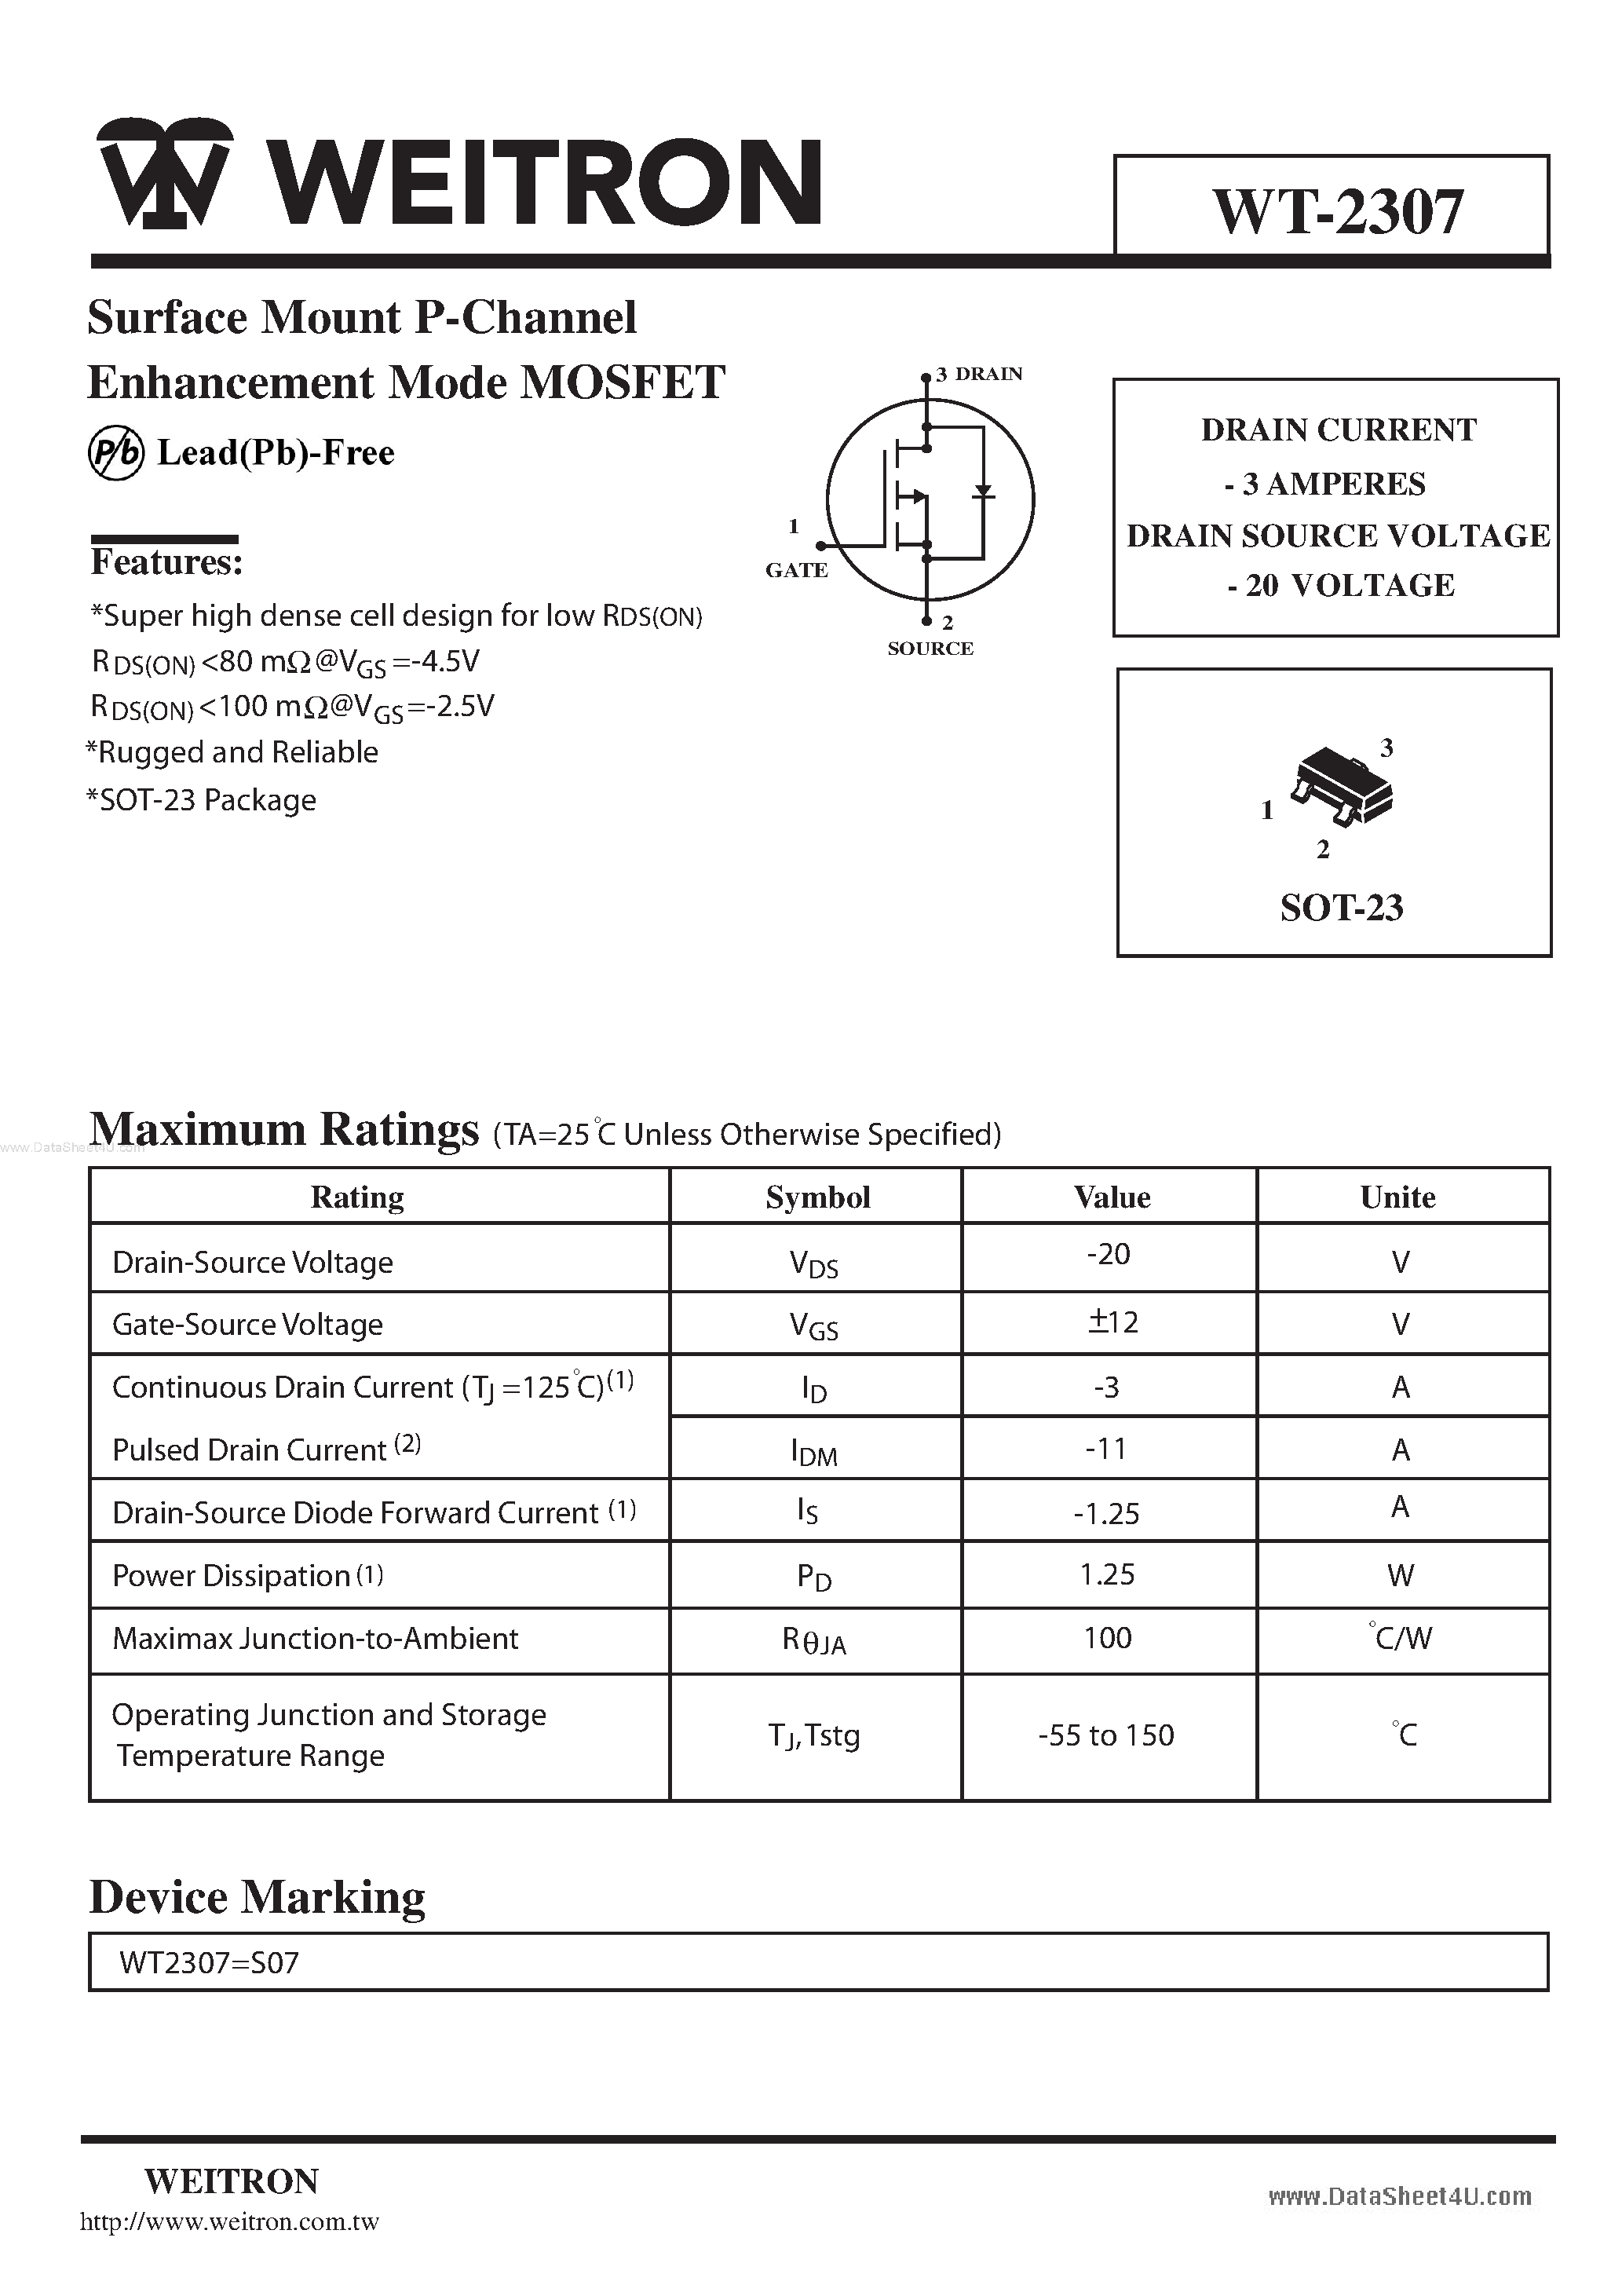 Datasheet WT-2307 - Surface Mount P-Channel Enhancement Mode MOSFET page 1